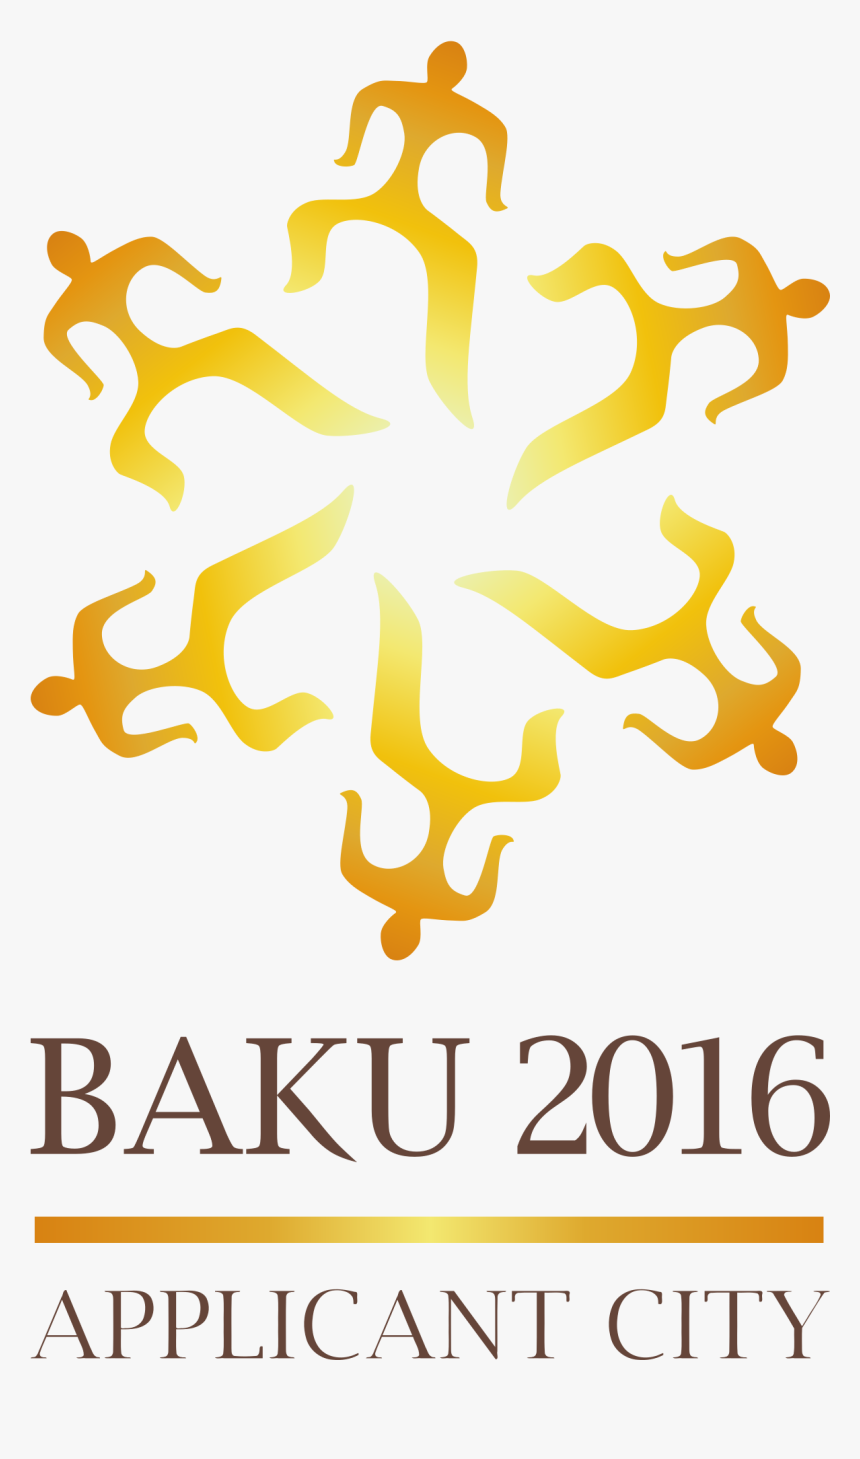 Baku 2016 Olympic Games, HD Png Download, Free Download